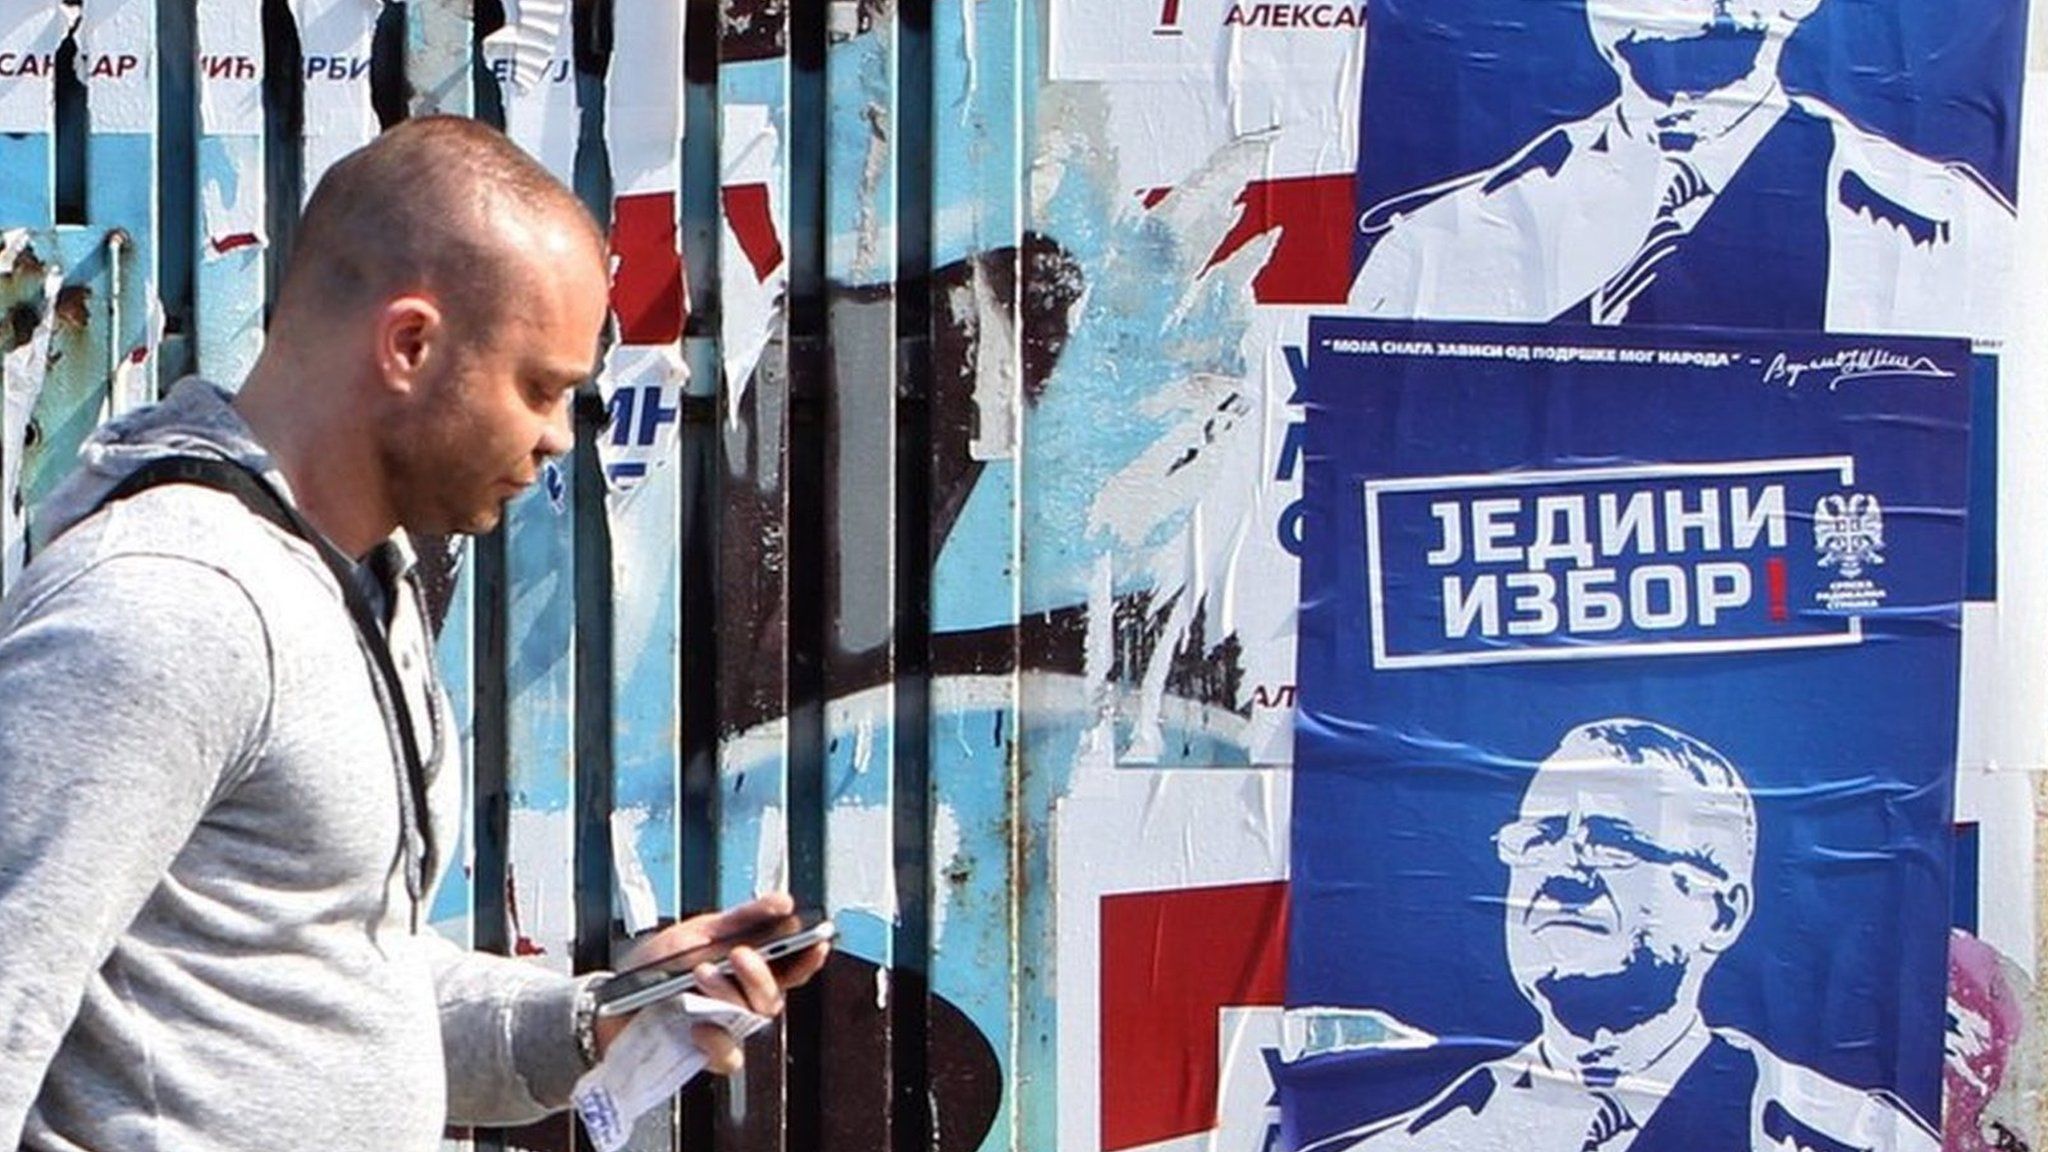 A man walks past an election poster of Serbian Radical Party leader Vojislav Seselj in Belgrade, Serbia (23 April 2016)